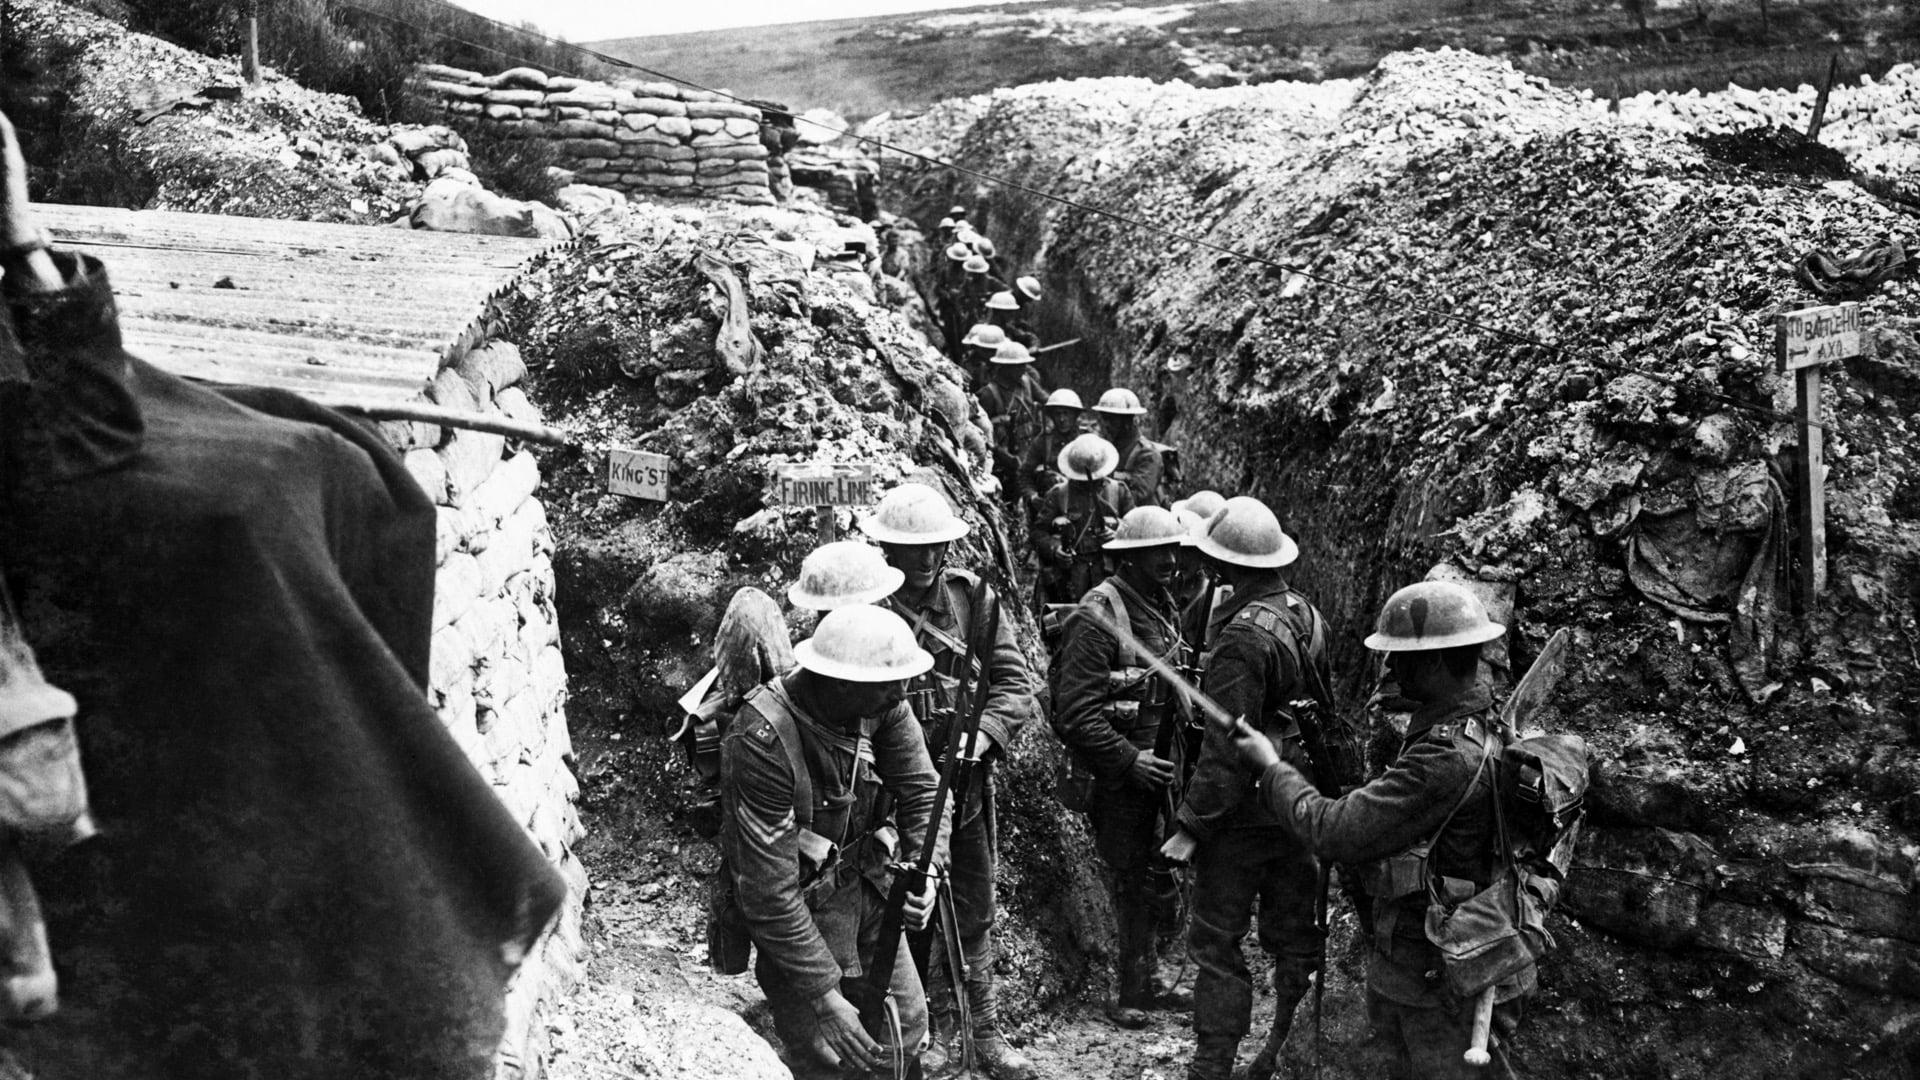 The First World War backdrop